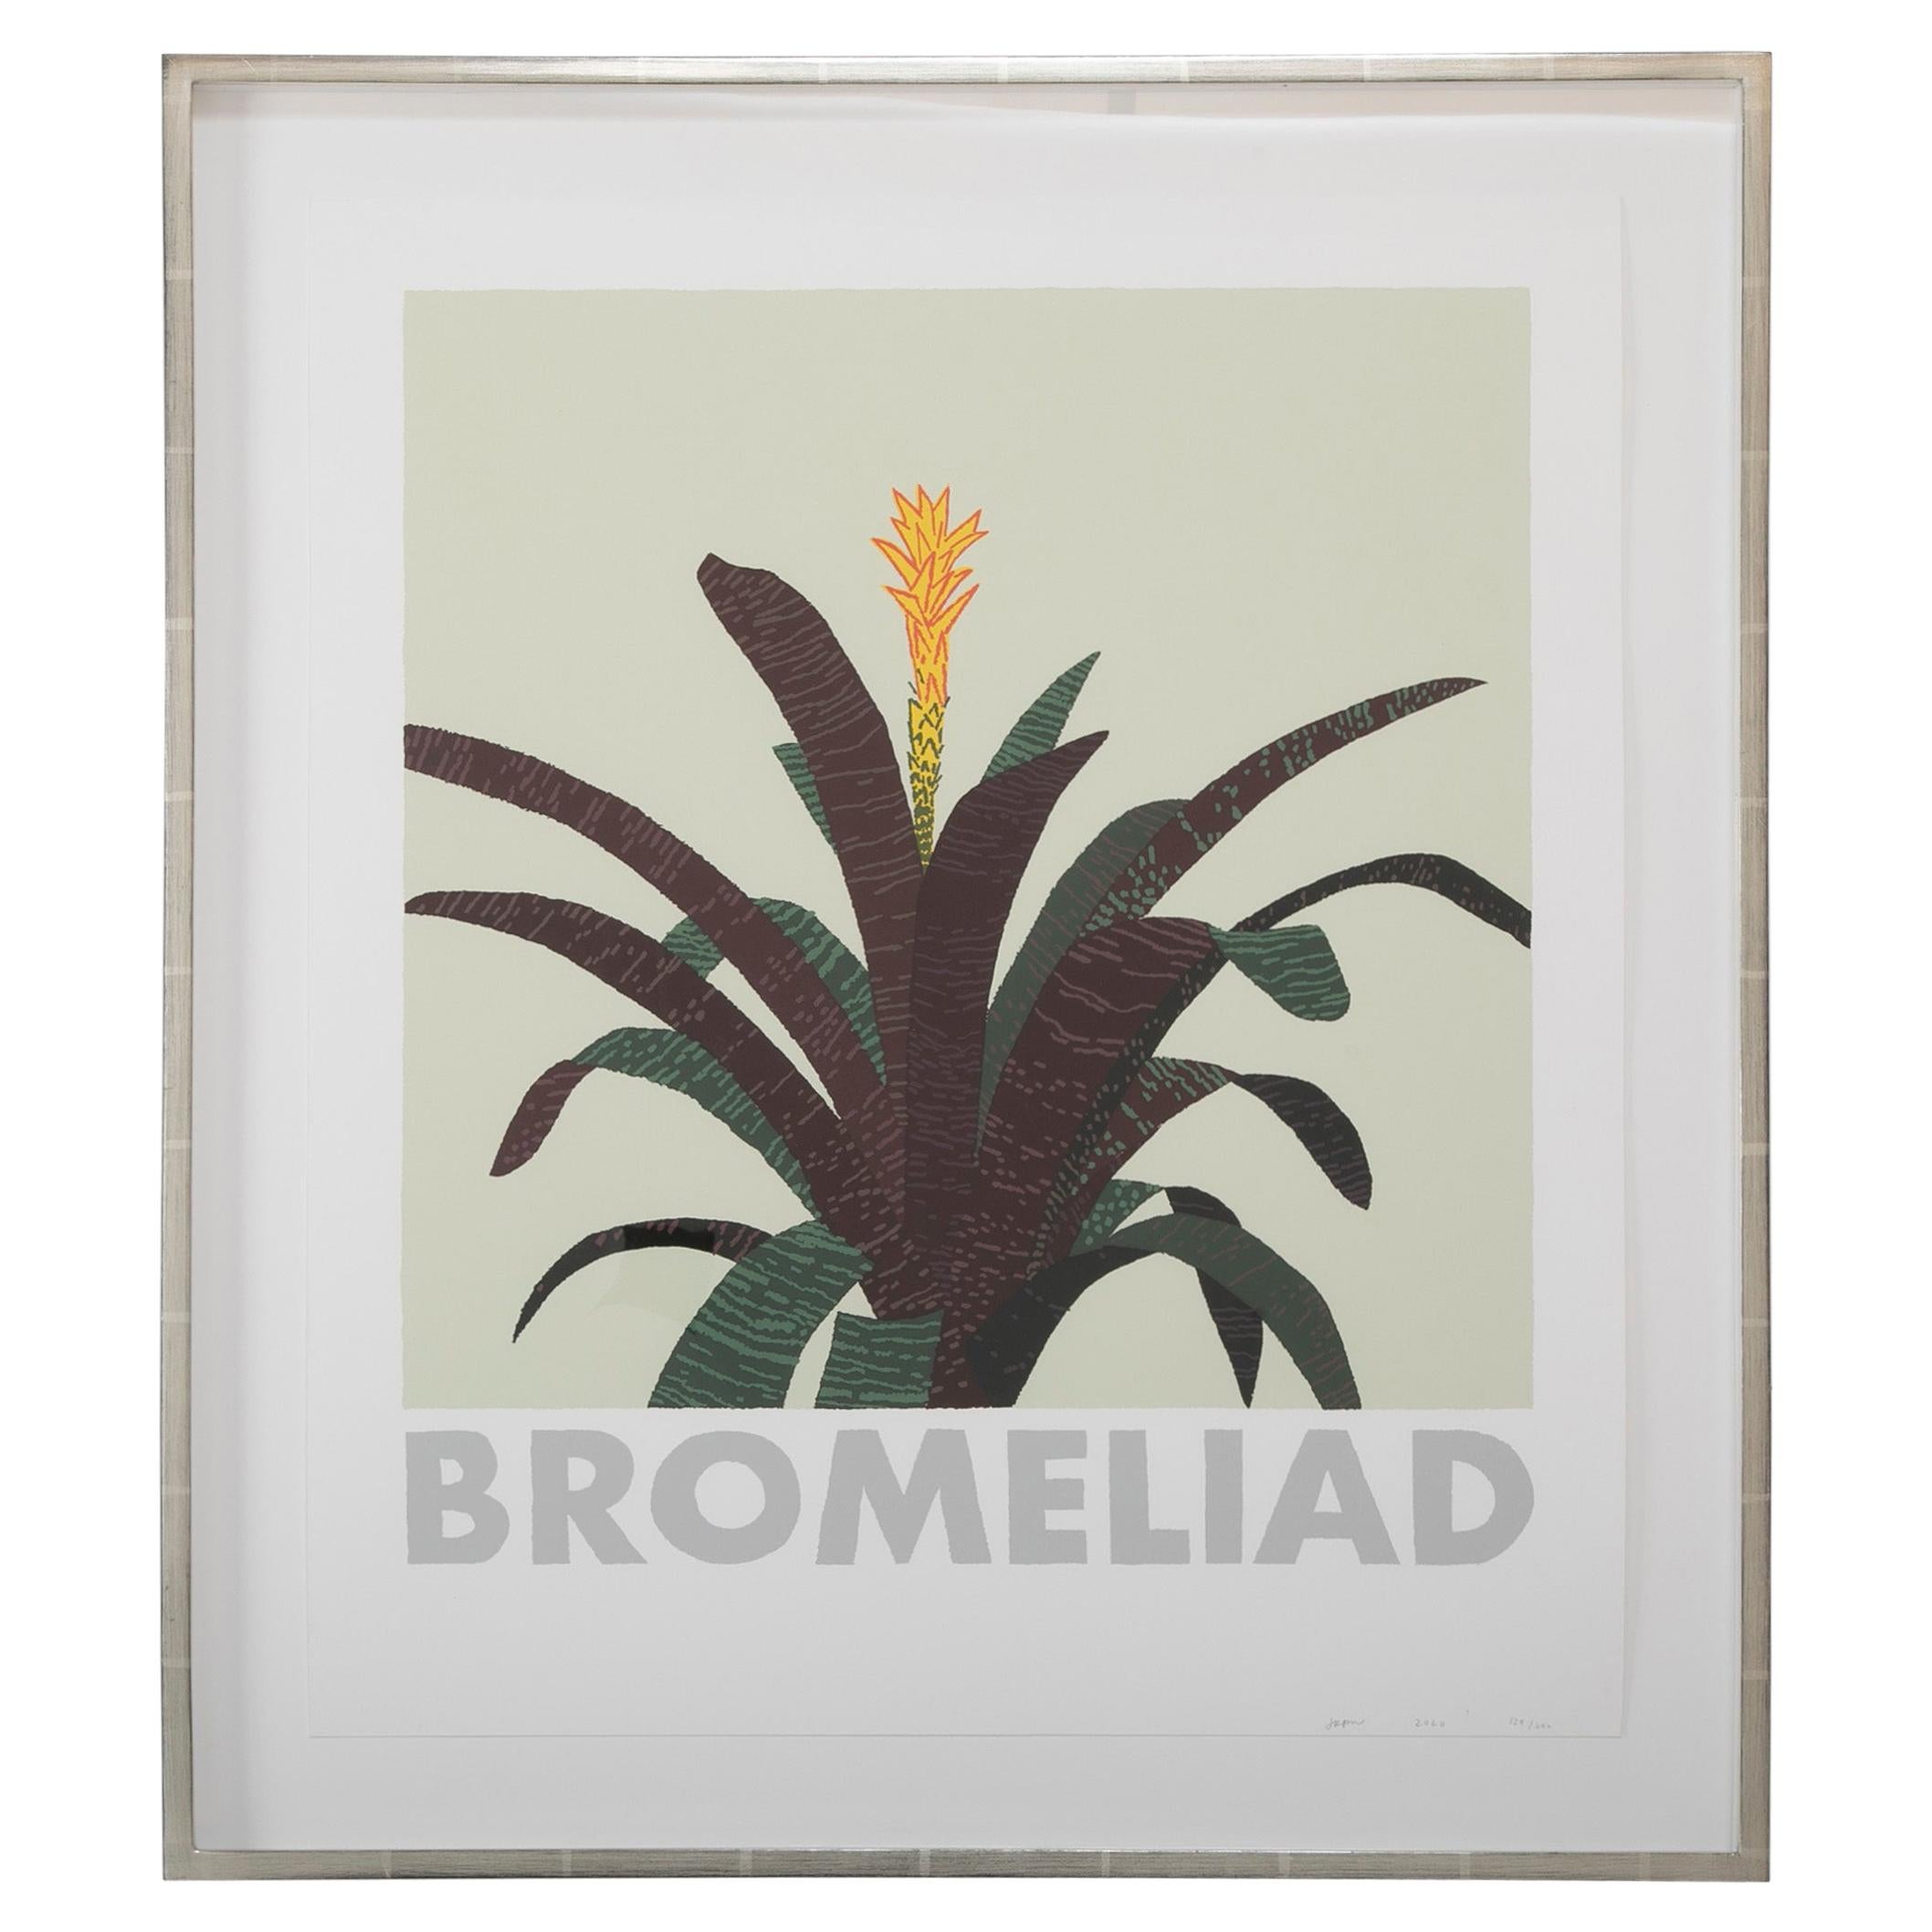 Jonas Wood "Bromeliad" 13 Color Screen Print